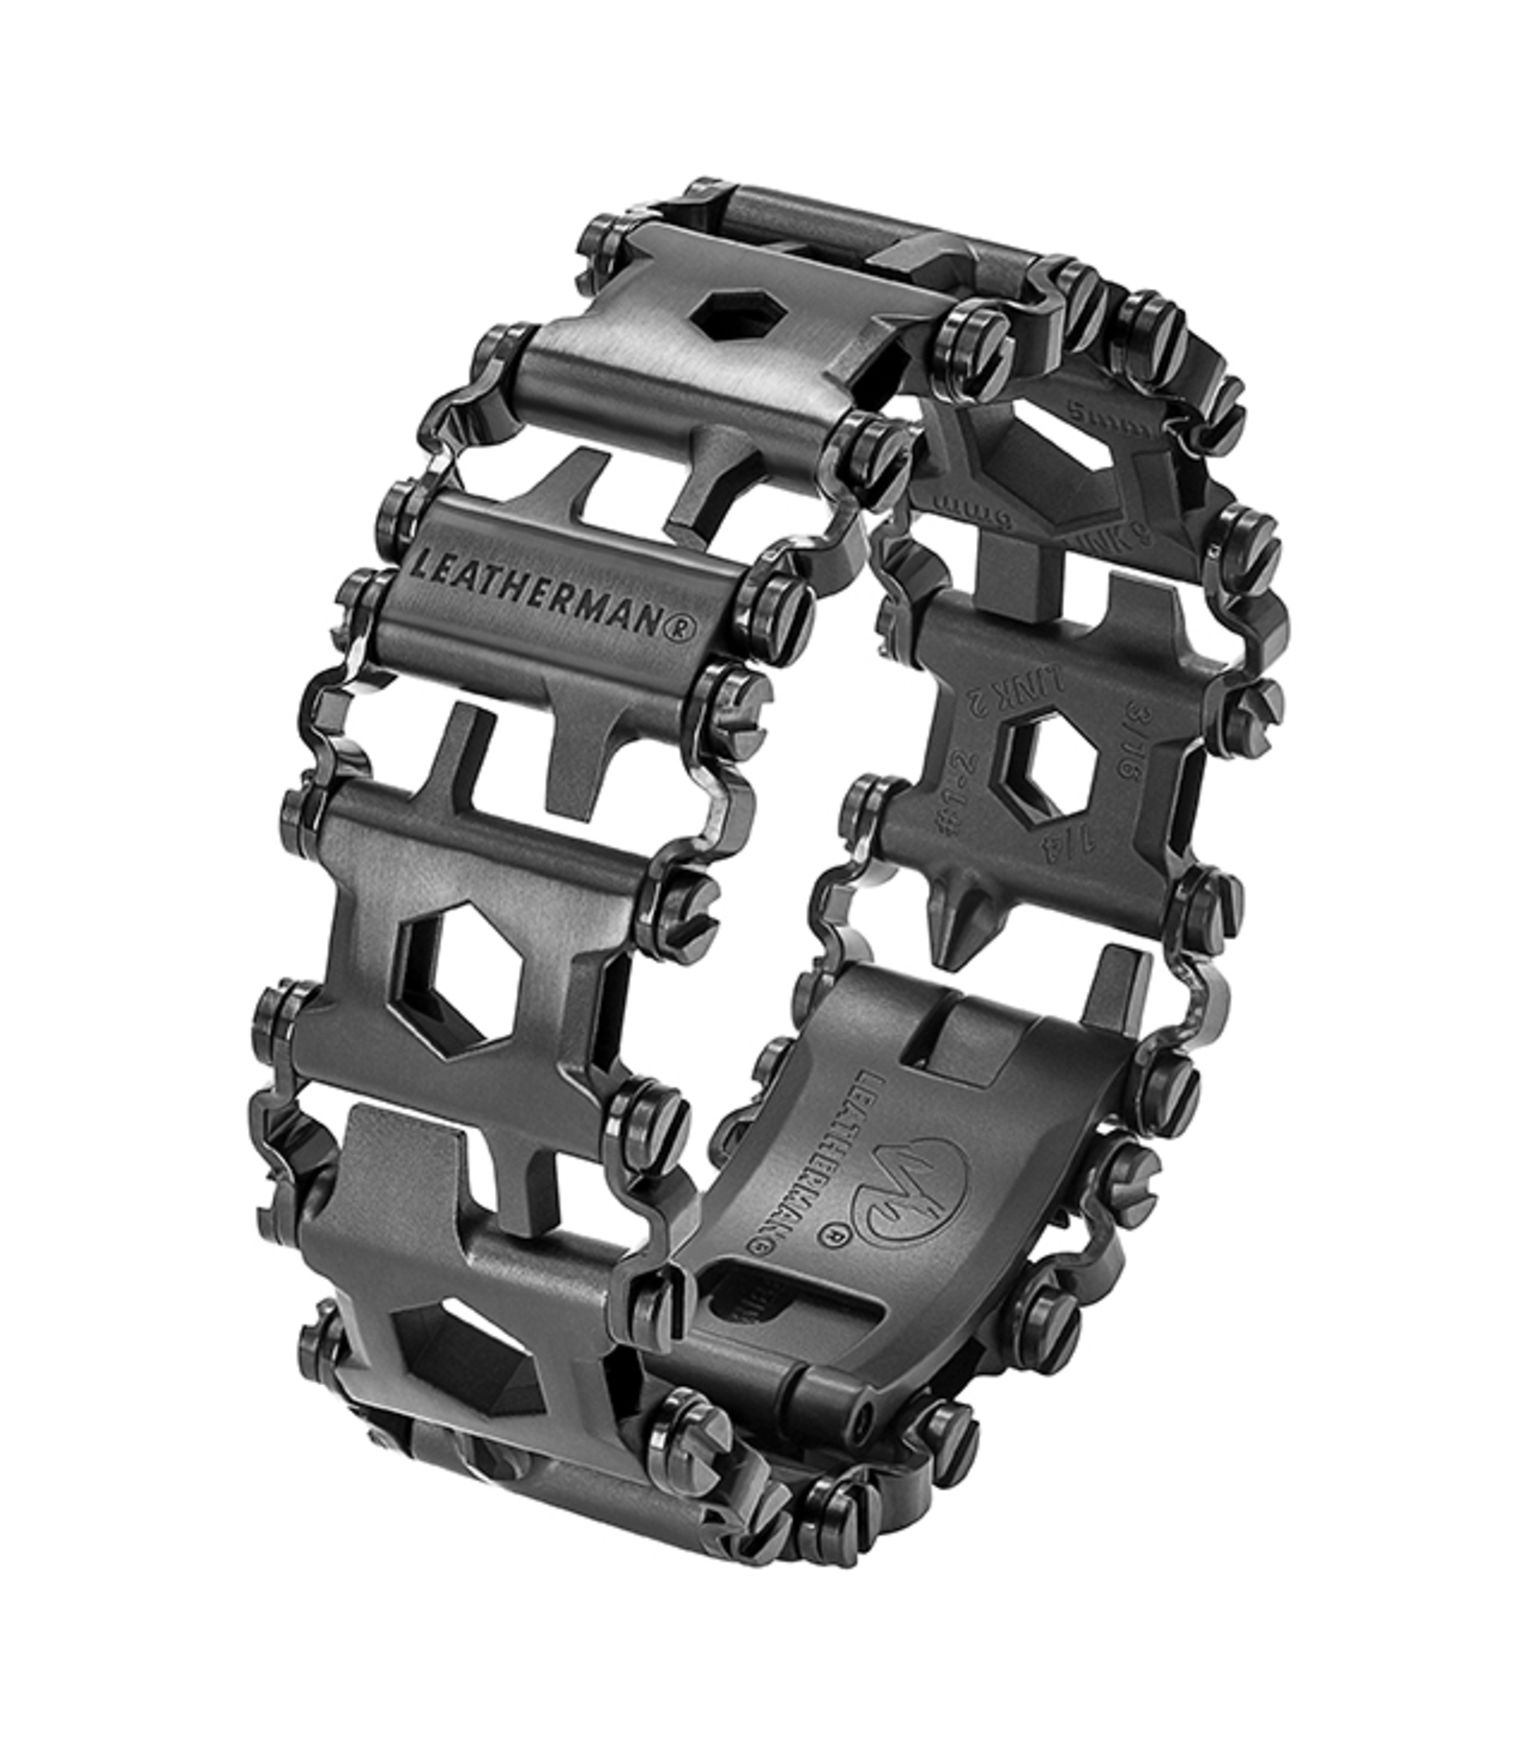 New Leatherman Tread Tempo Watch and Tread LT Slimmer MultiTool Bracelet